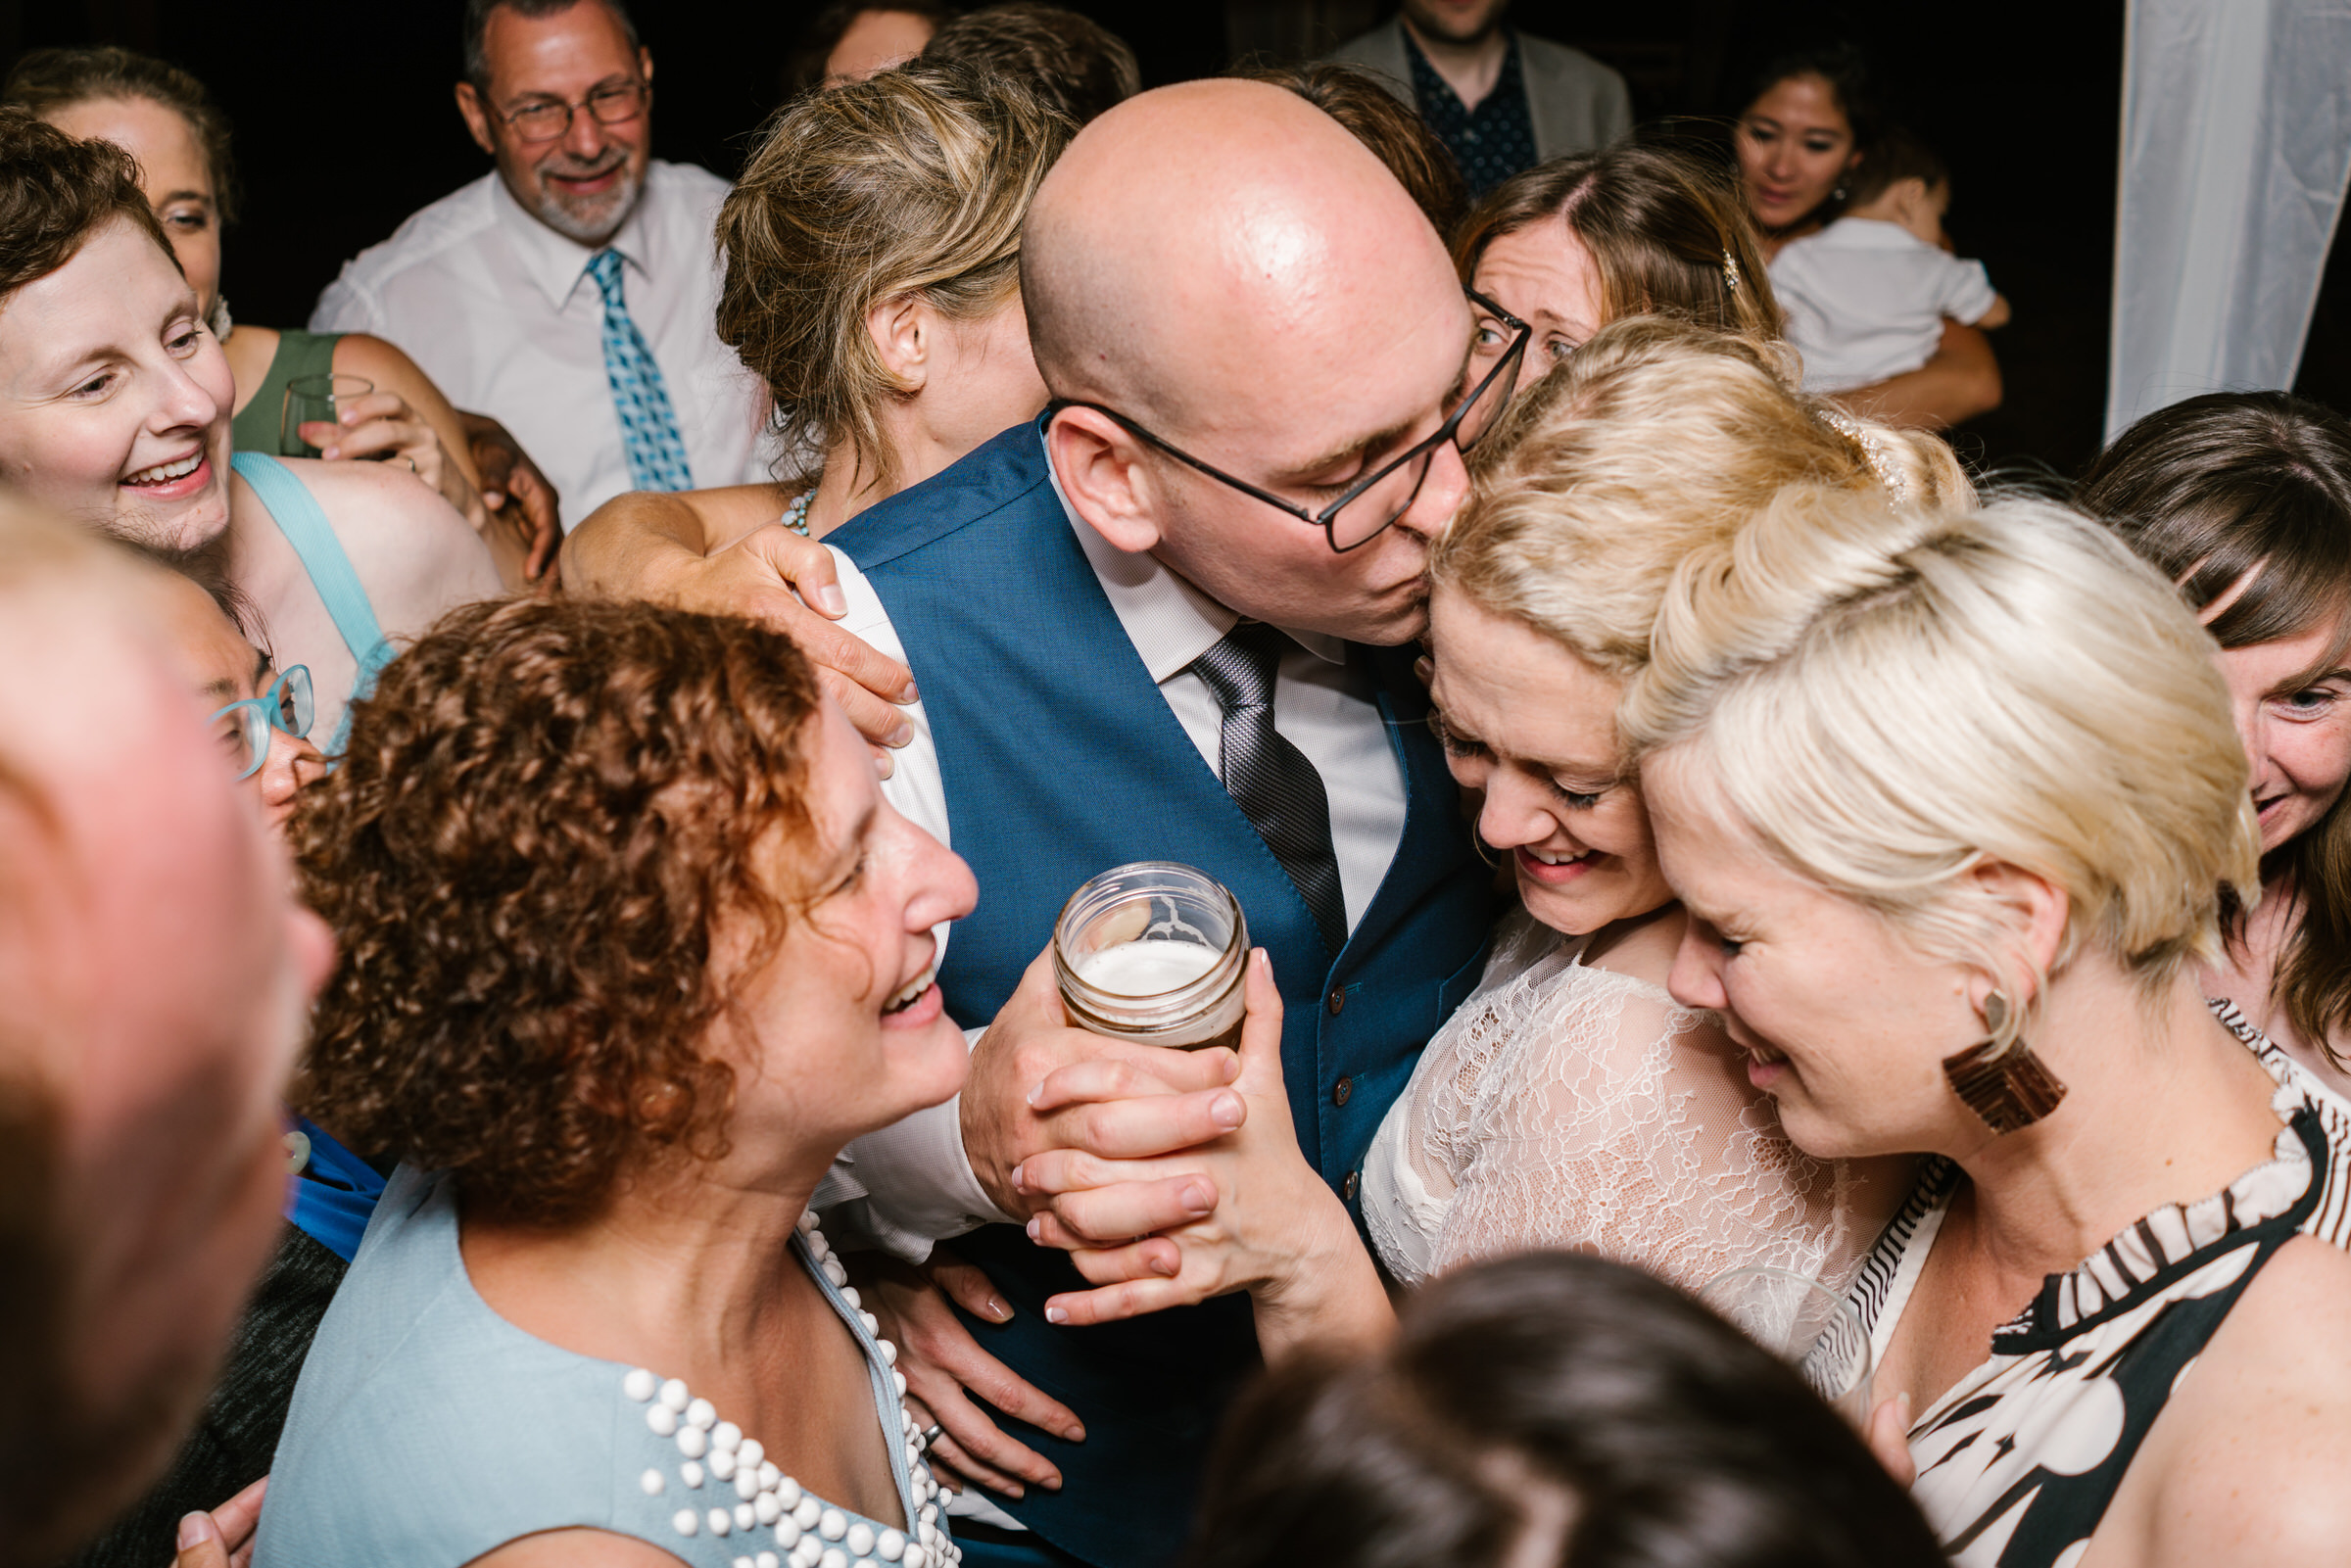 Wayfarer Whidbey Island Wedding: Sara and Joe ad friends share a group hug while dancing